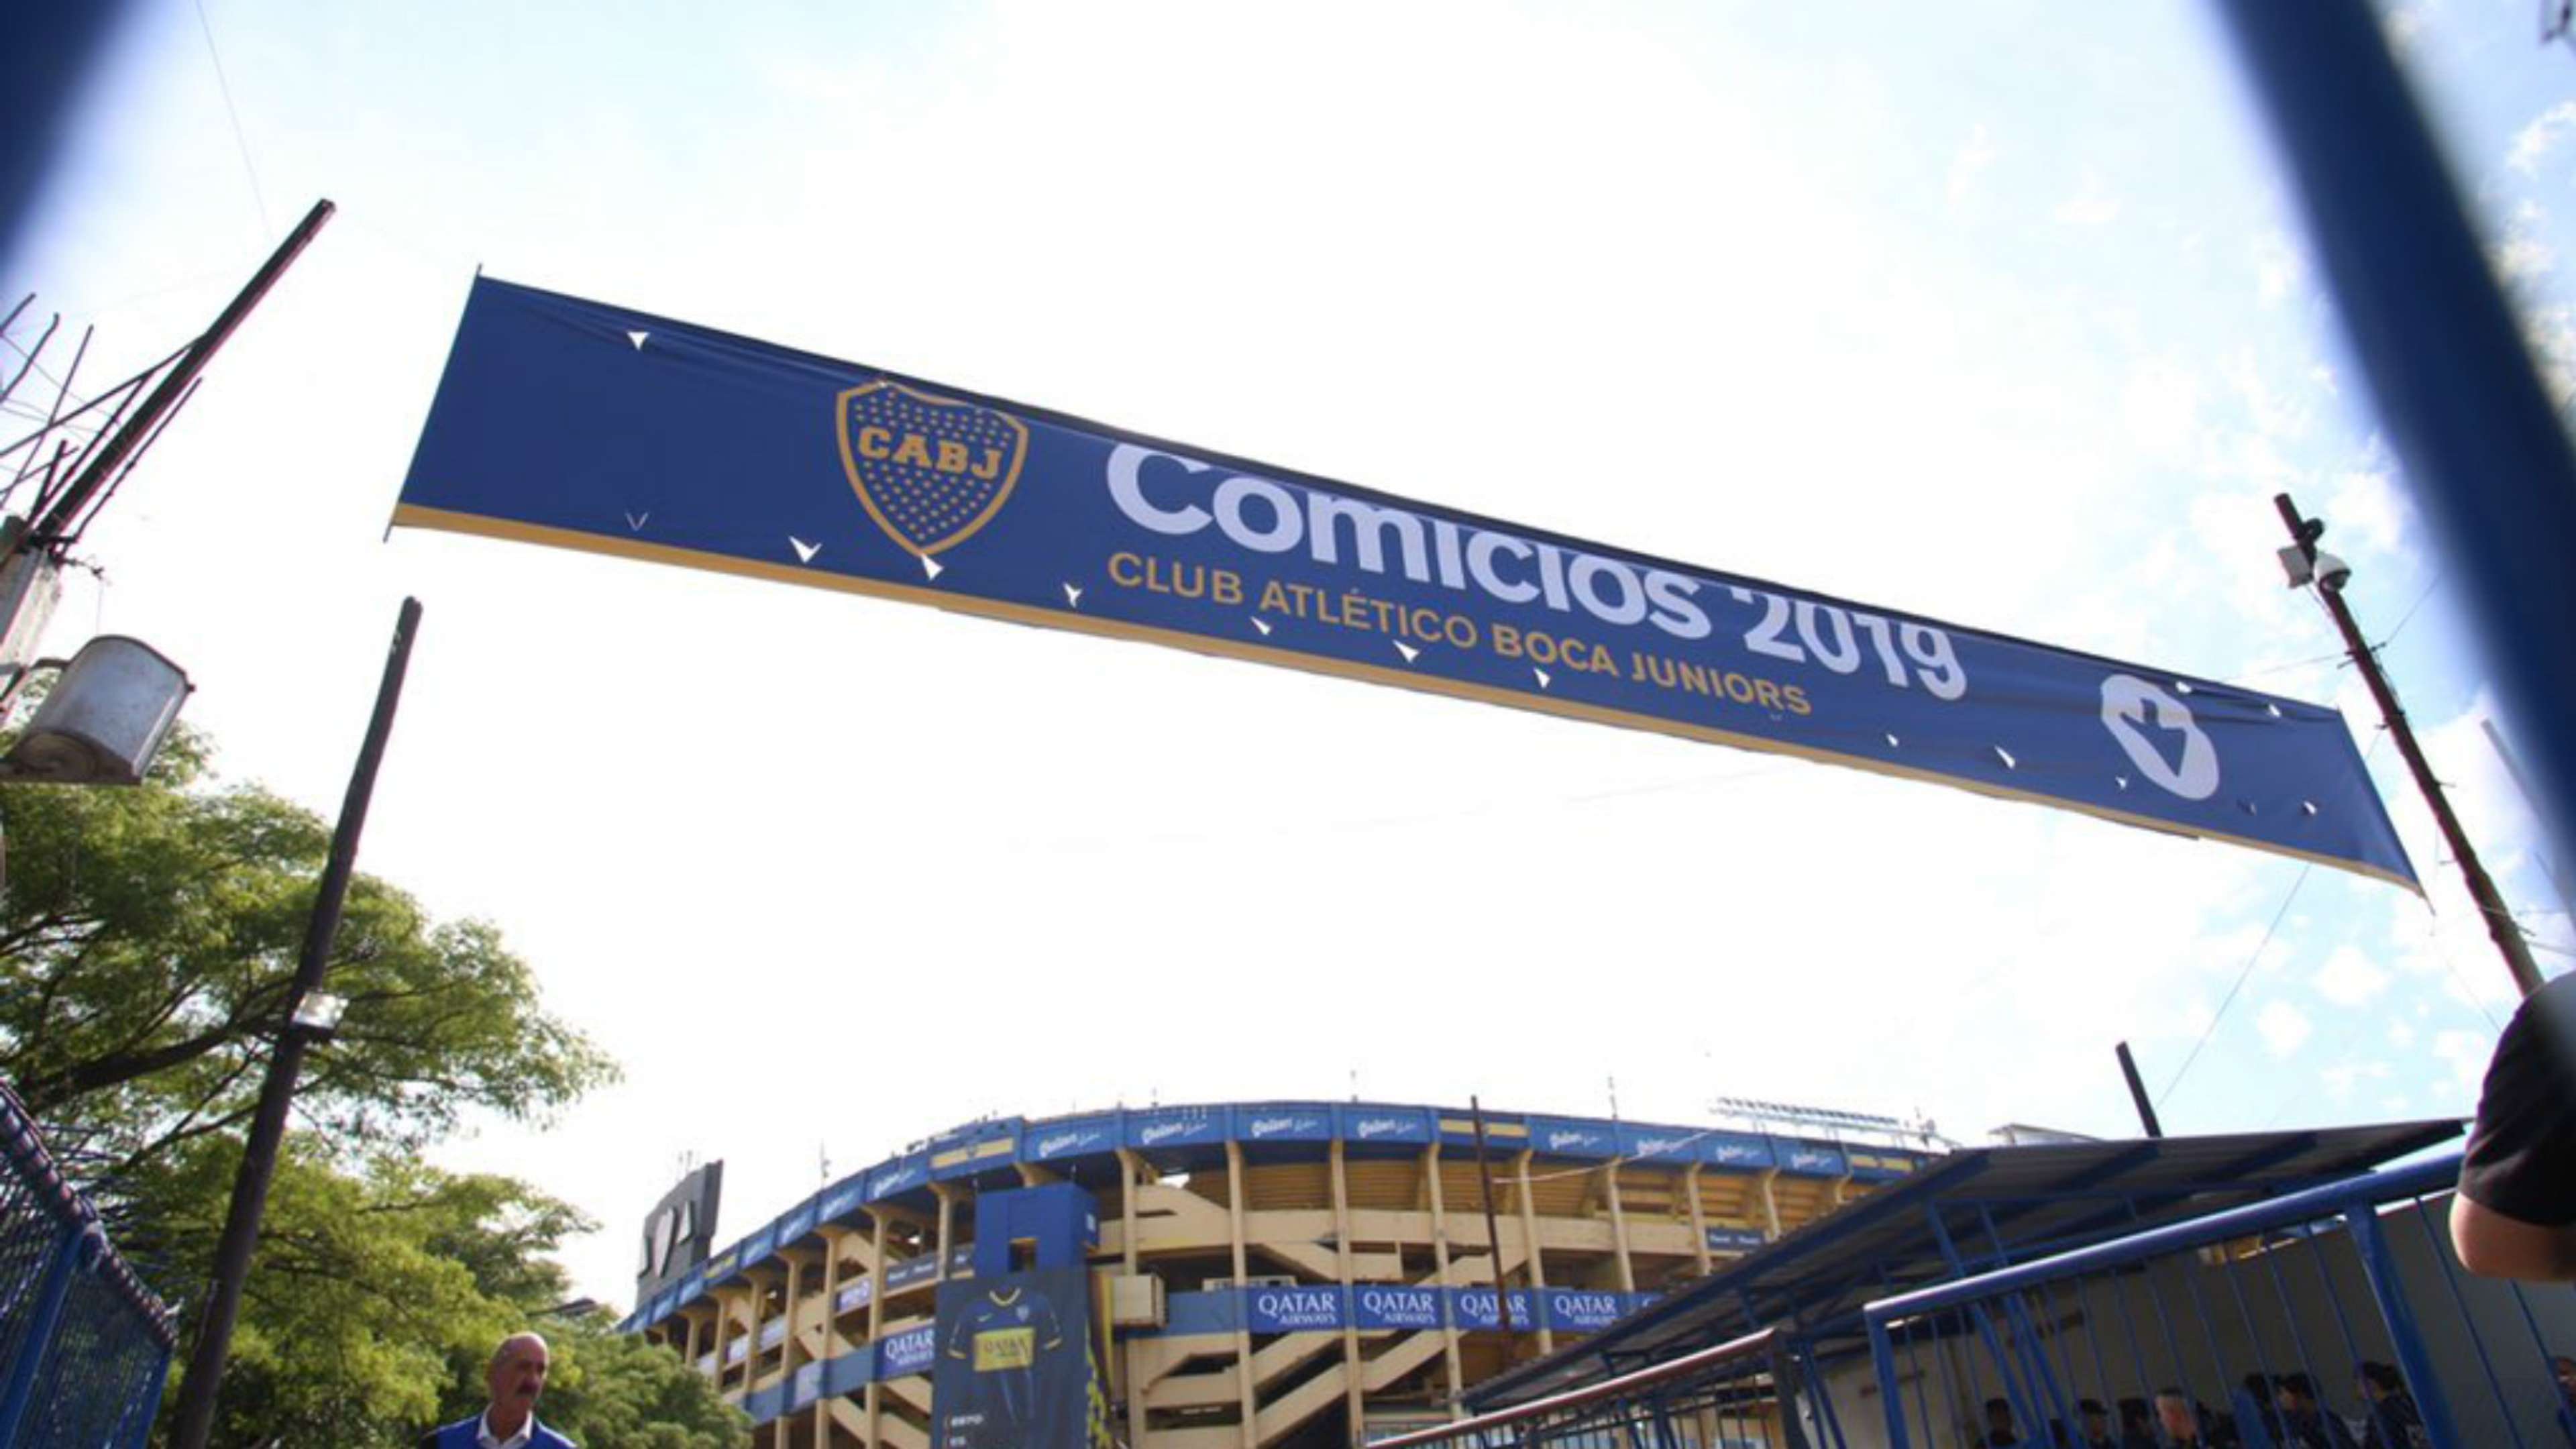 Boca Juniors Elecciones 2019